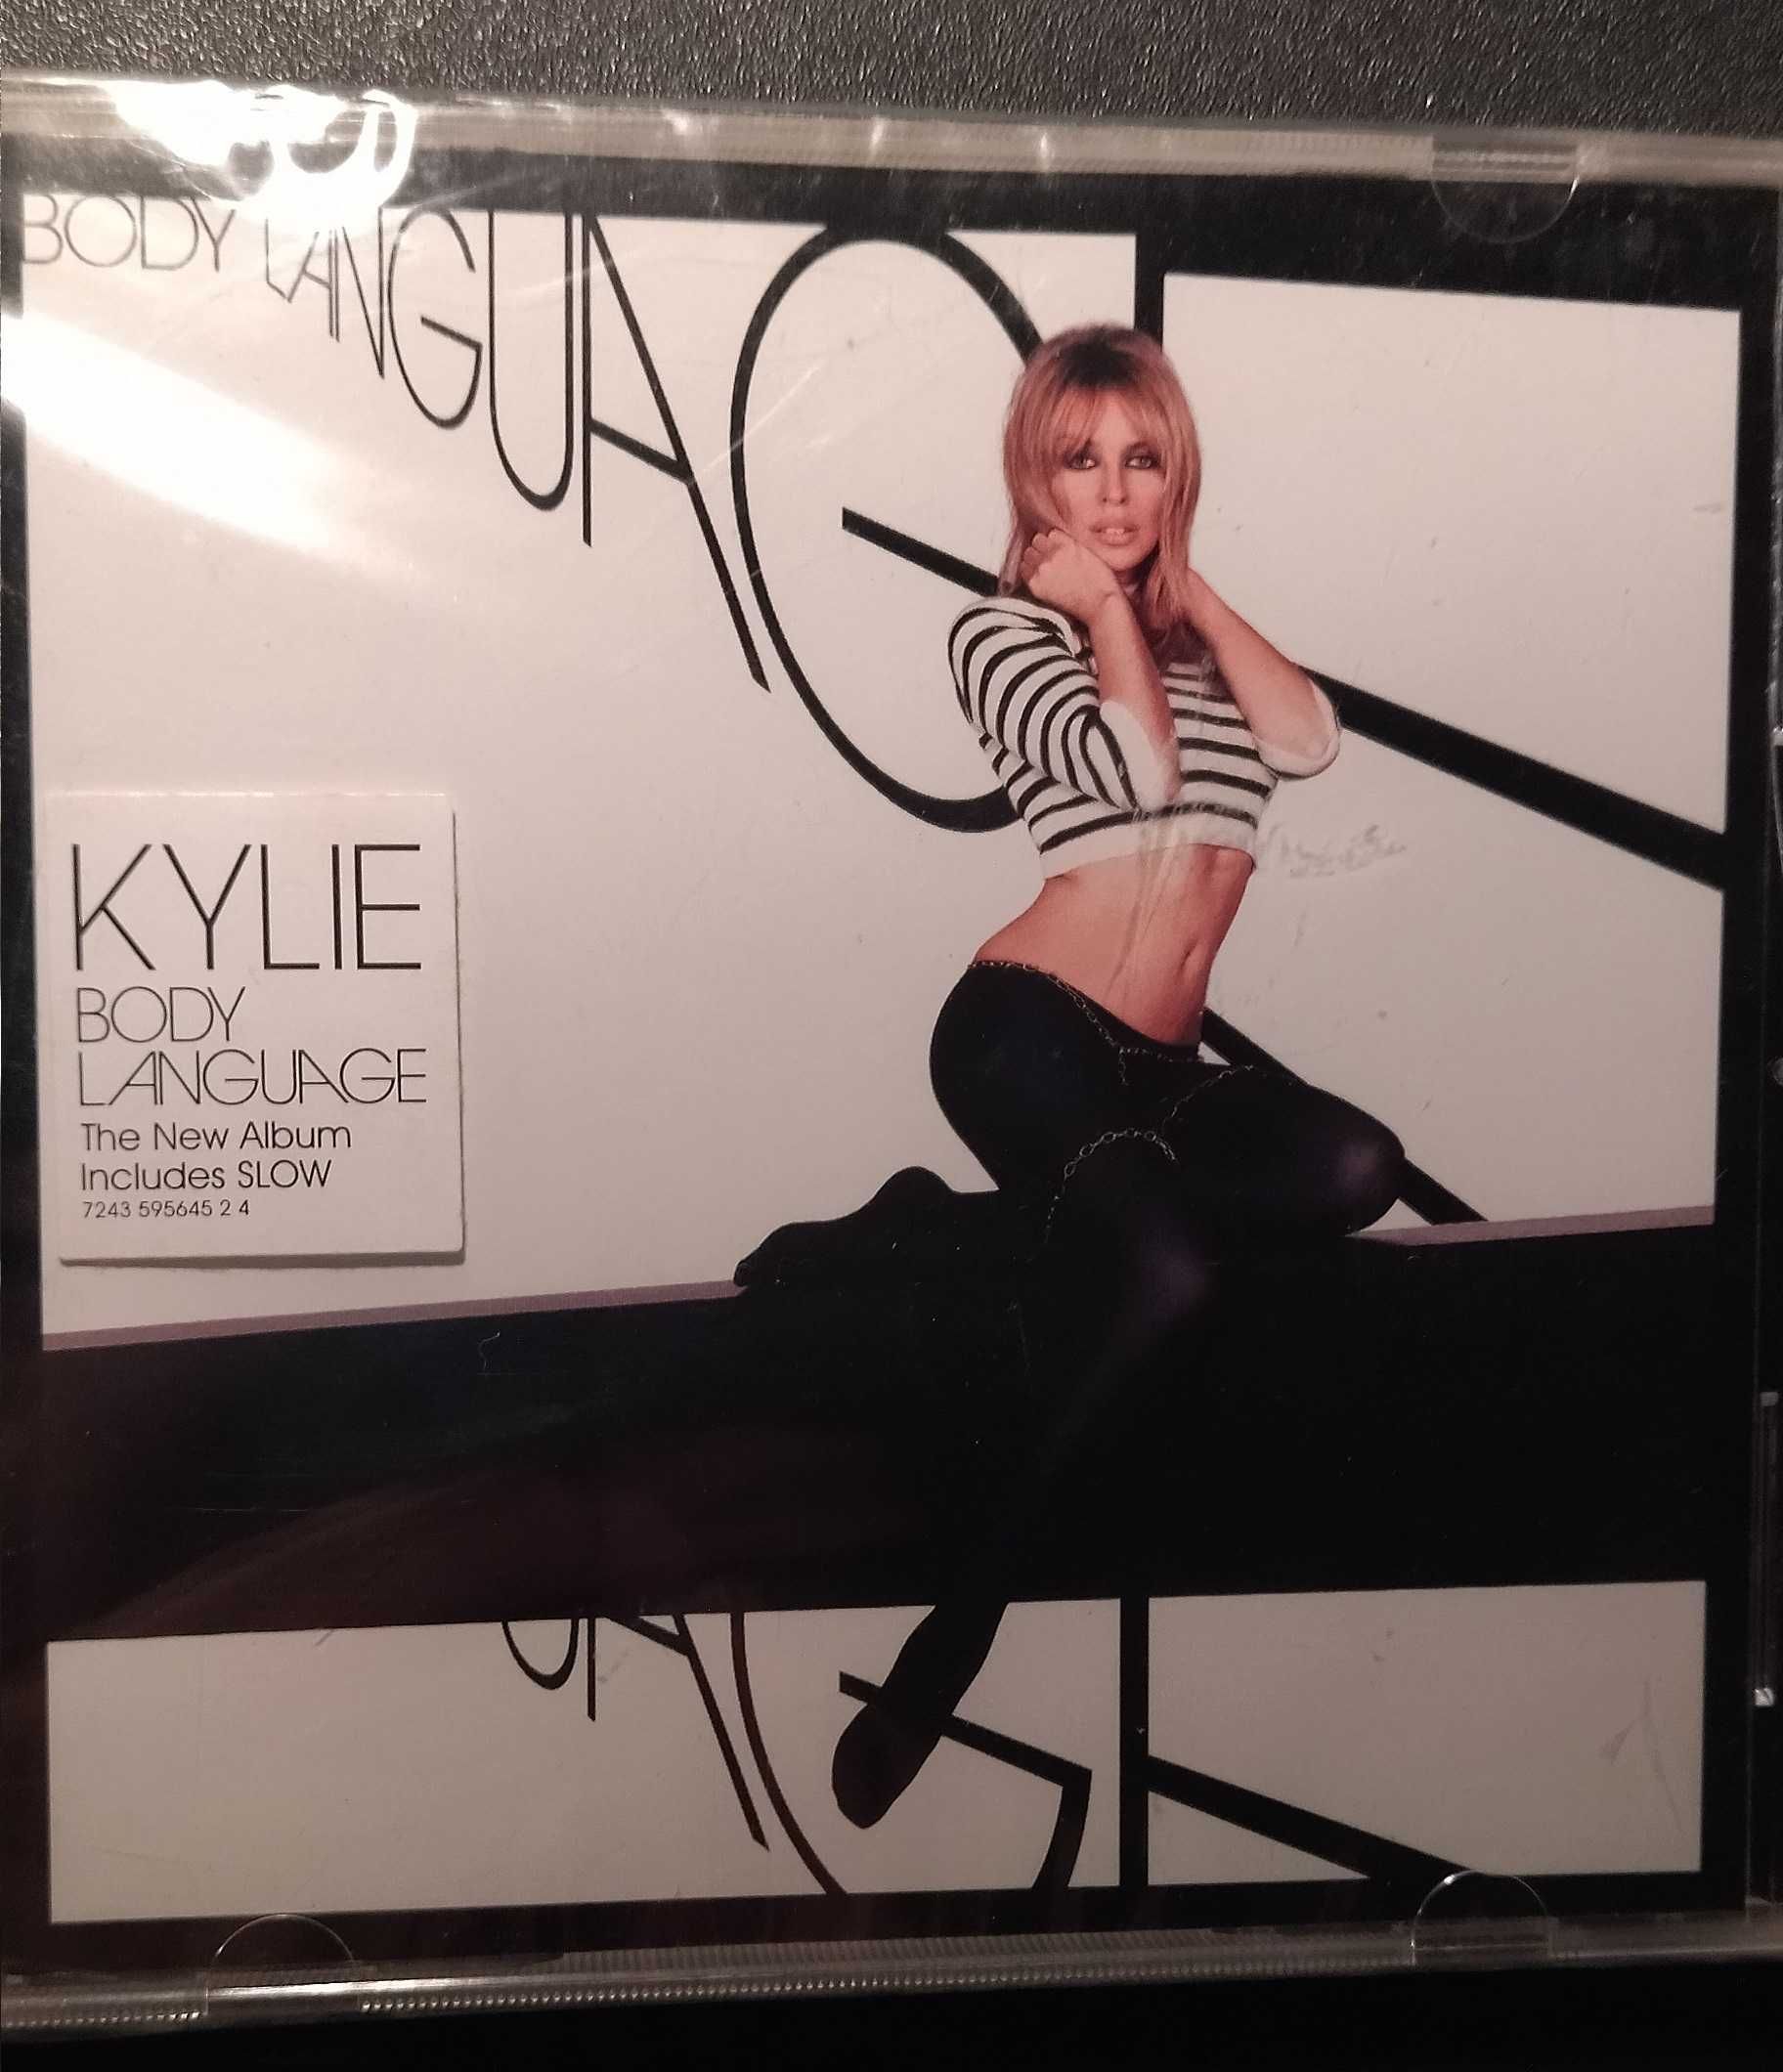 Kylie Minogue - "Body language" CD